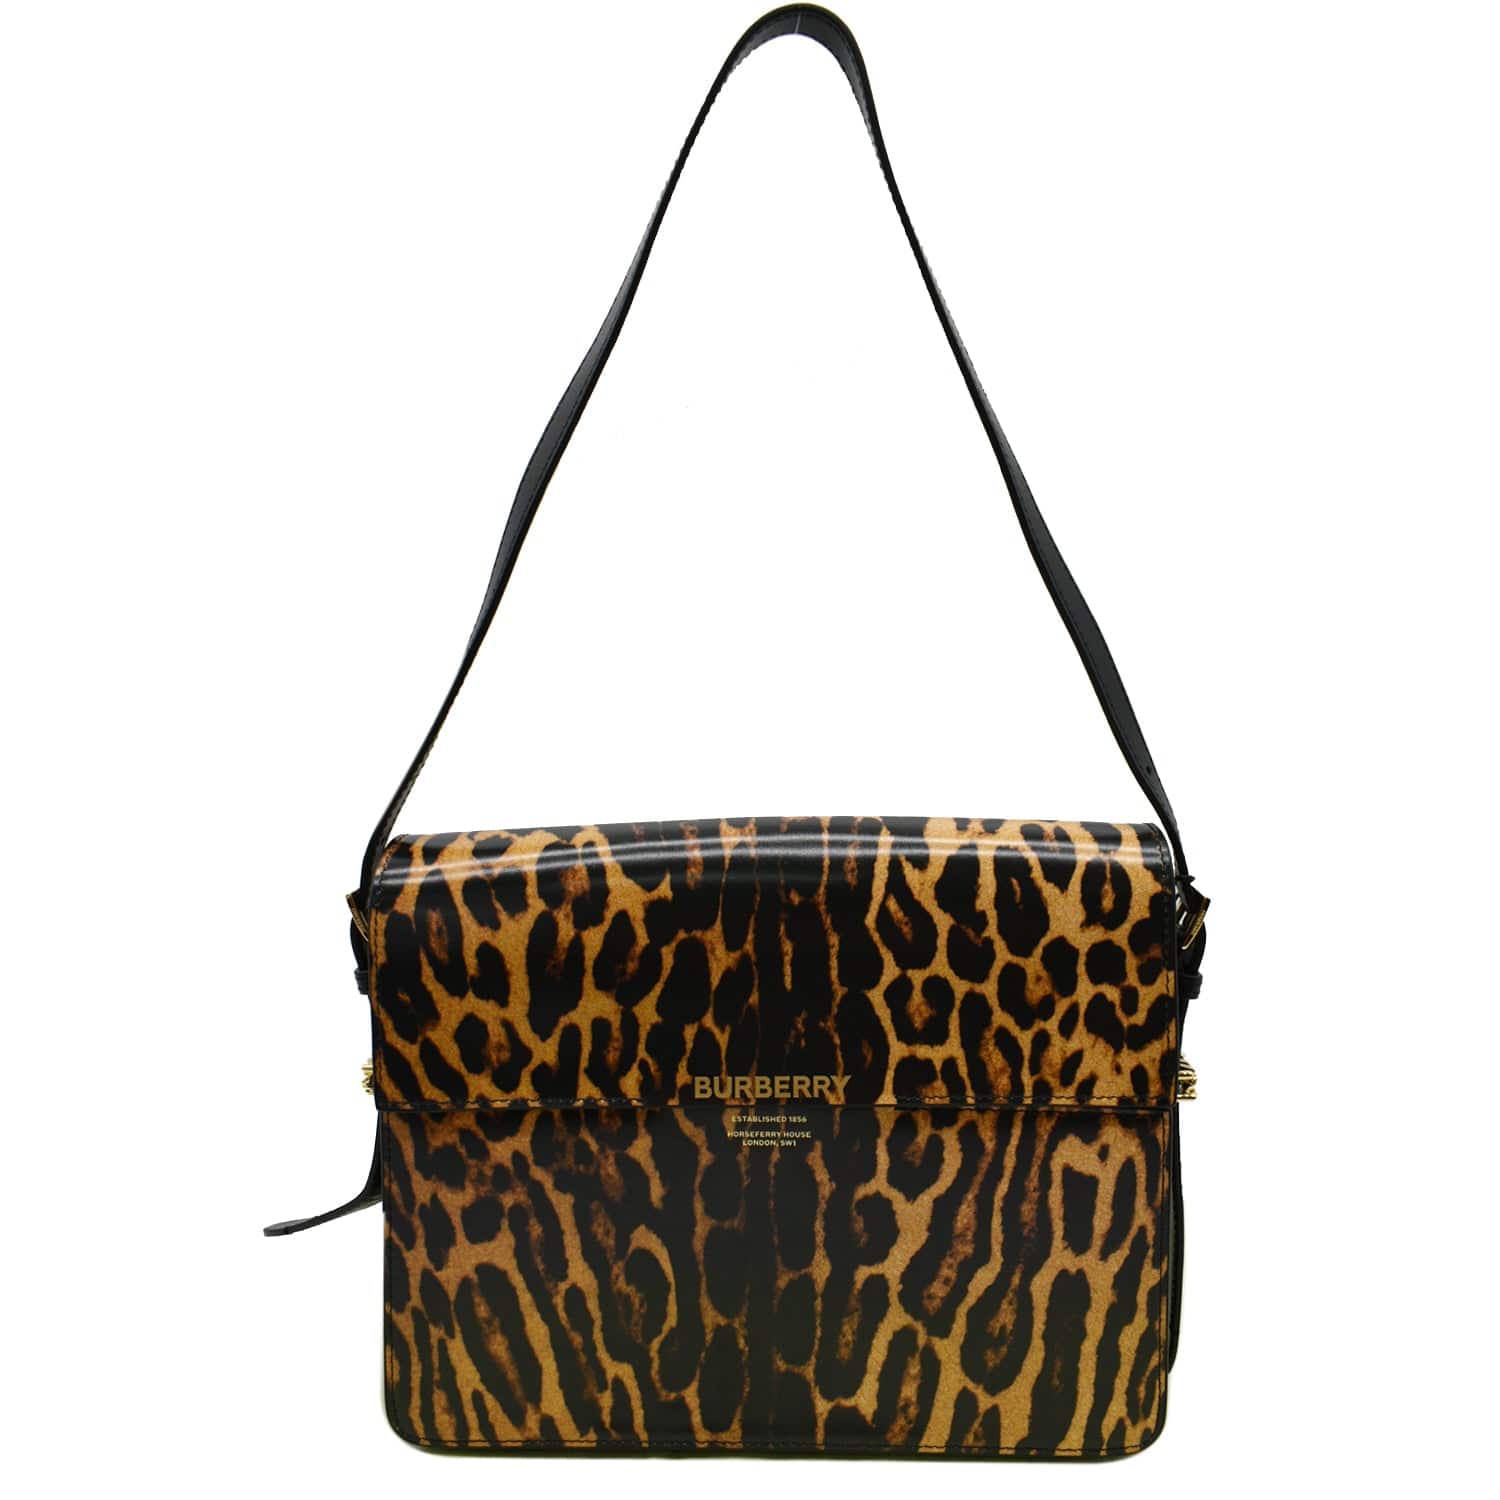 Safari Print Bags: Dolce and Gabbana Leopard Print Purses Make For